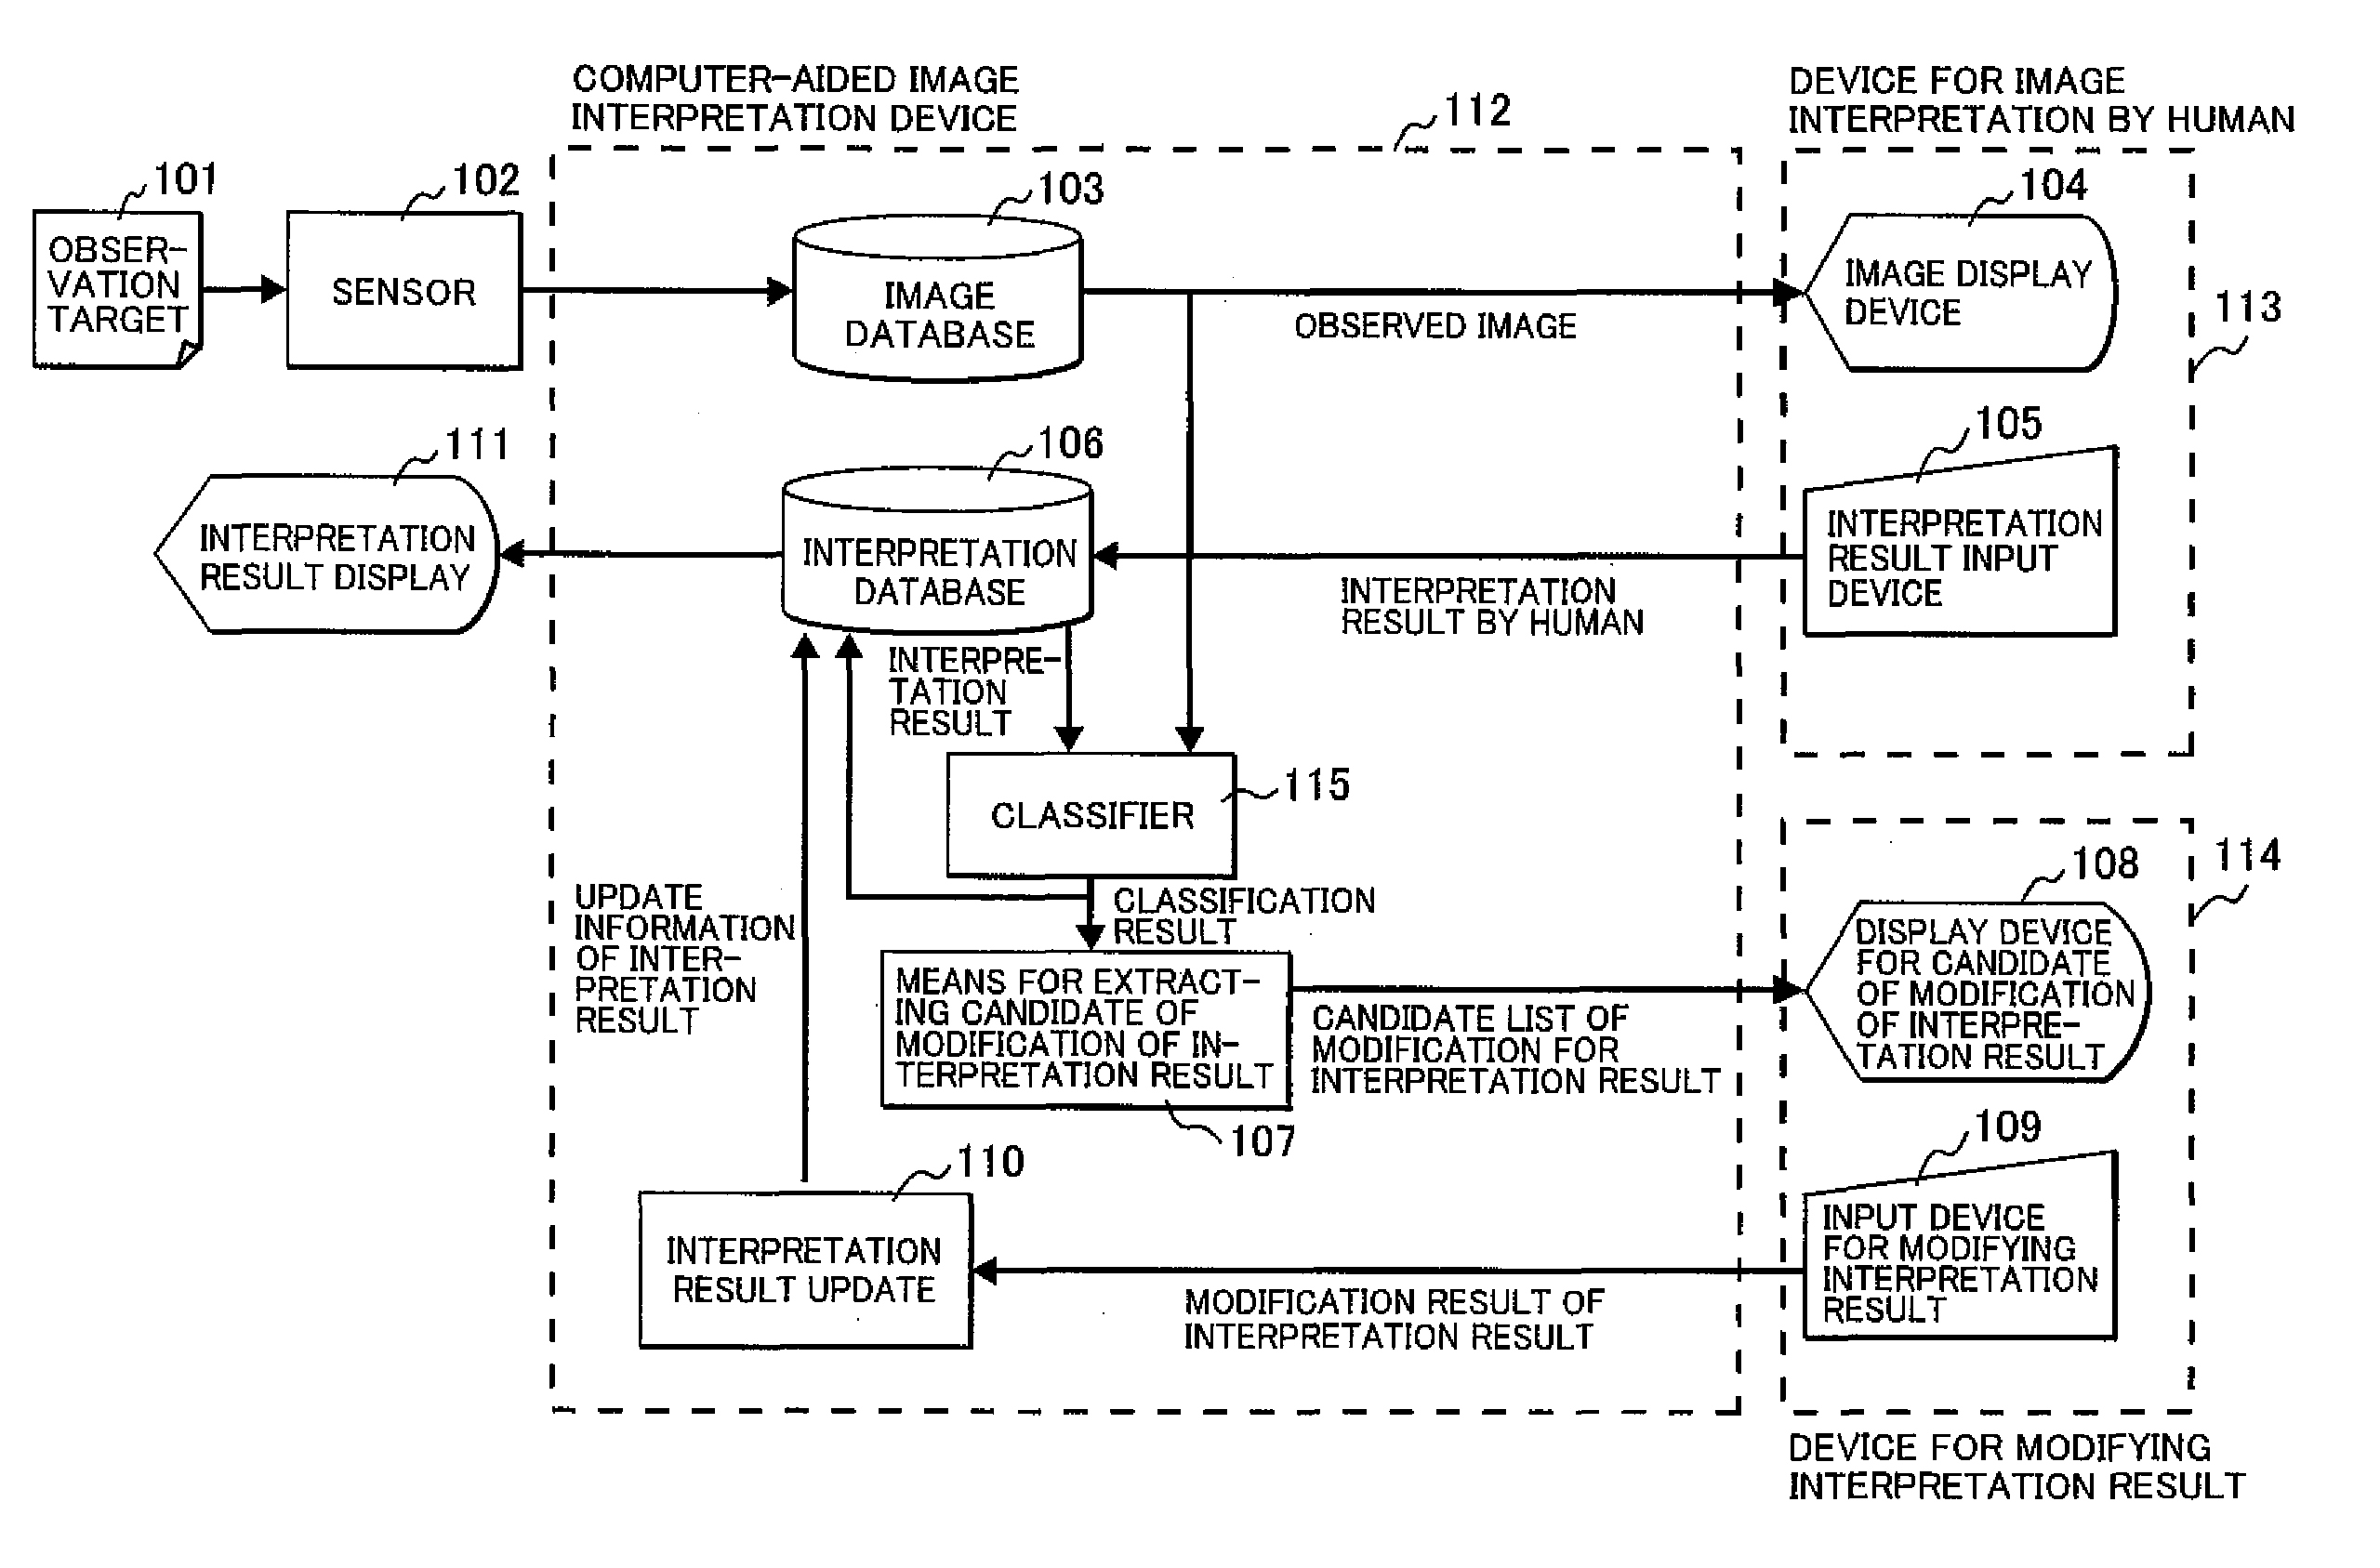 Computer-aided image interpretation method and device